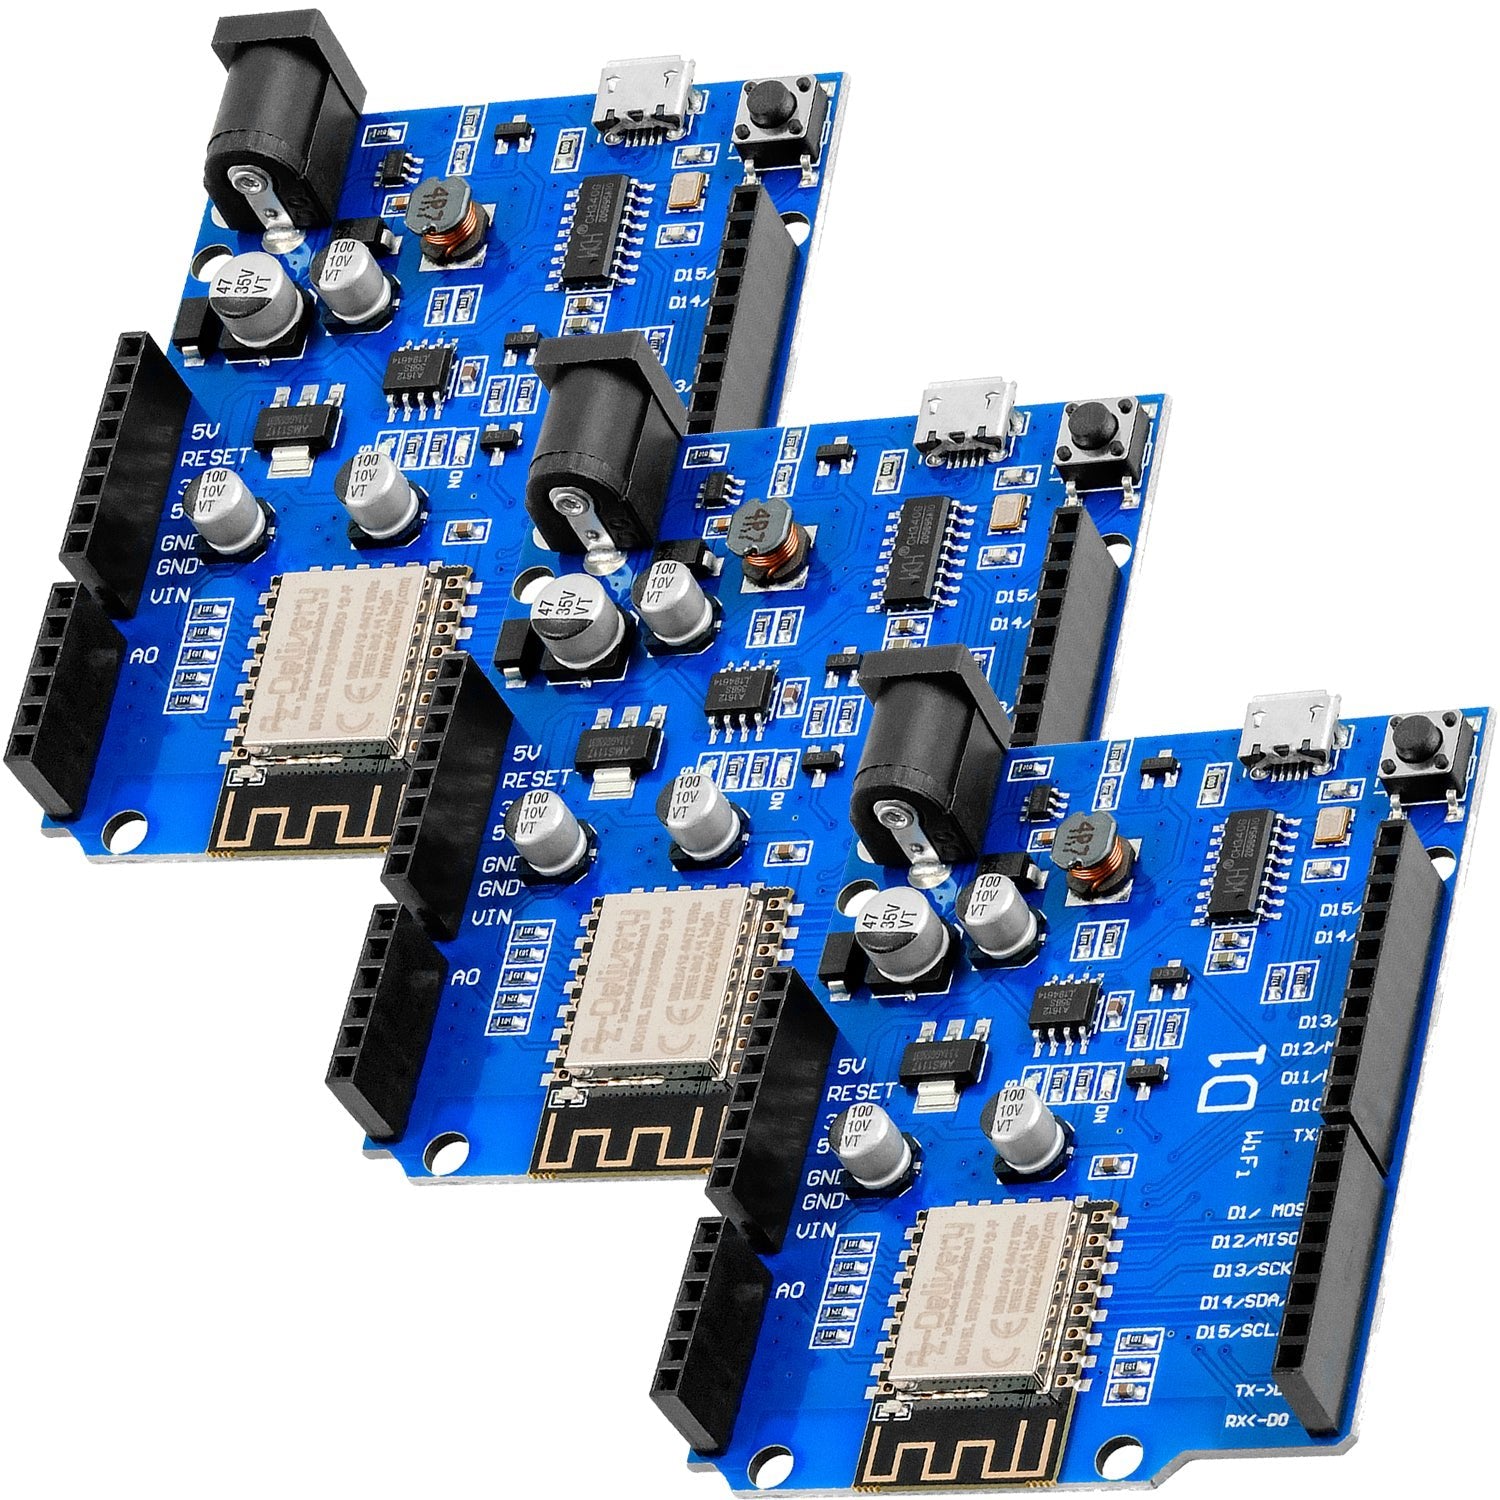 D1 Board NodeMCU ESP8266MOD-12F WiFi Wlan Modul kompatibel mit Arduino - AZ-Delivery